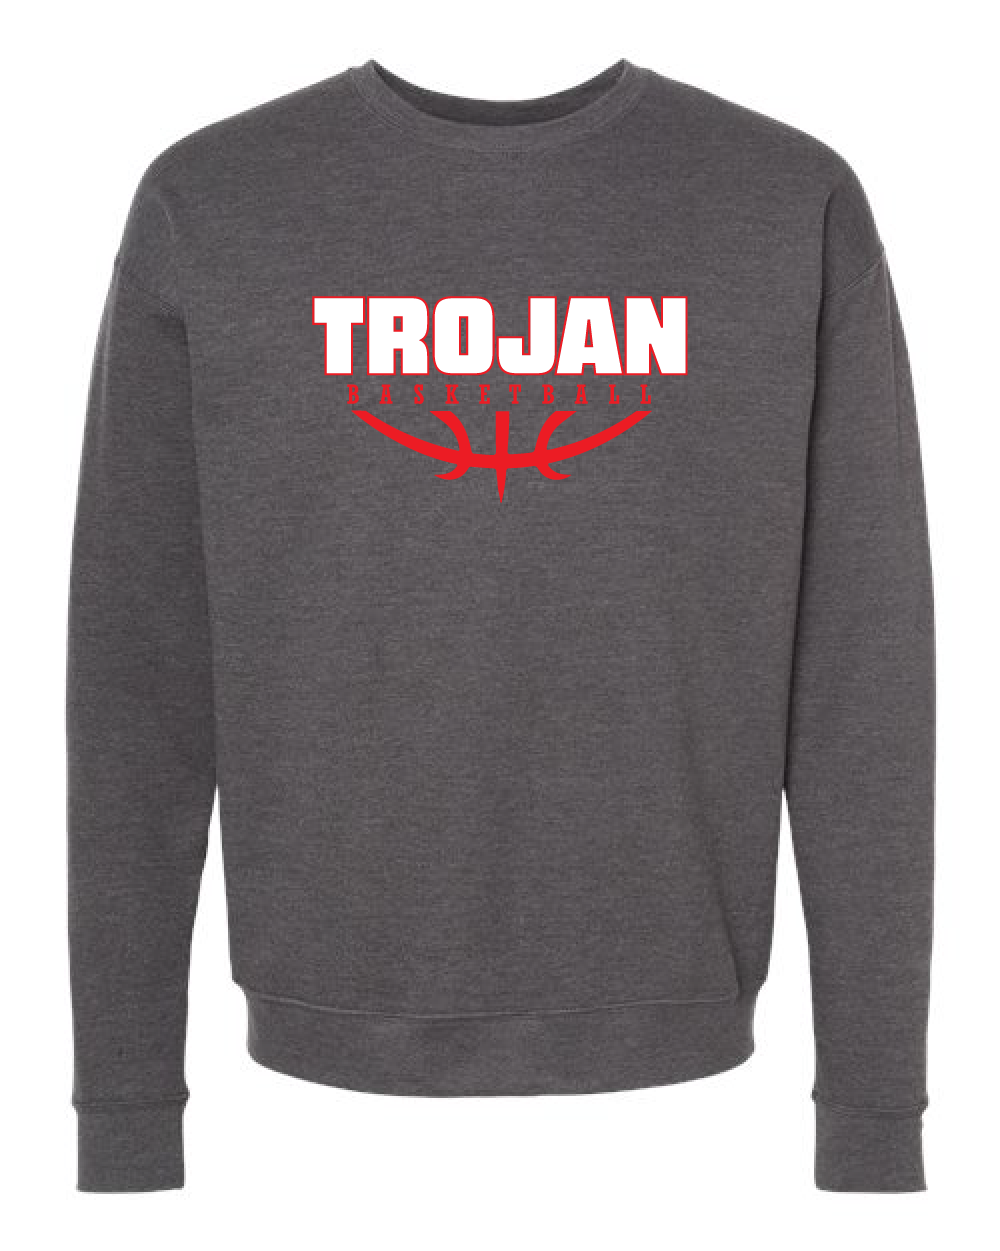 Trojan Basketball Ribs Sweatshirt